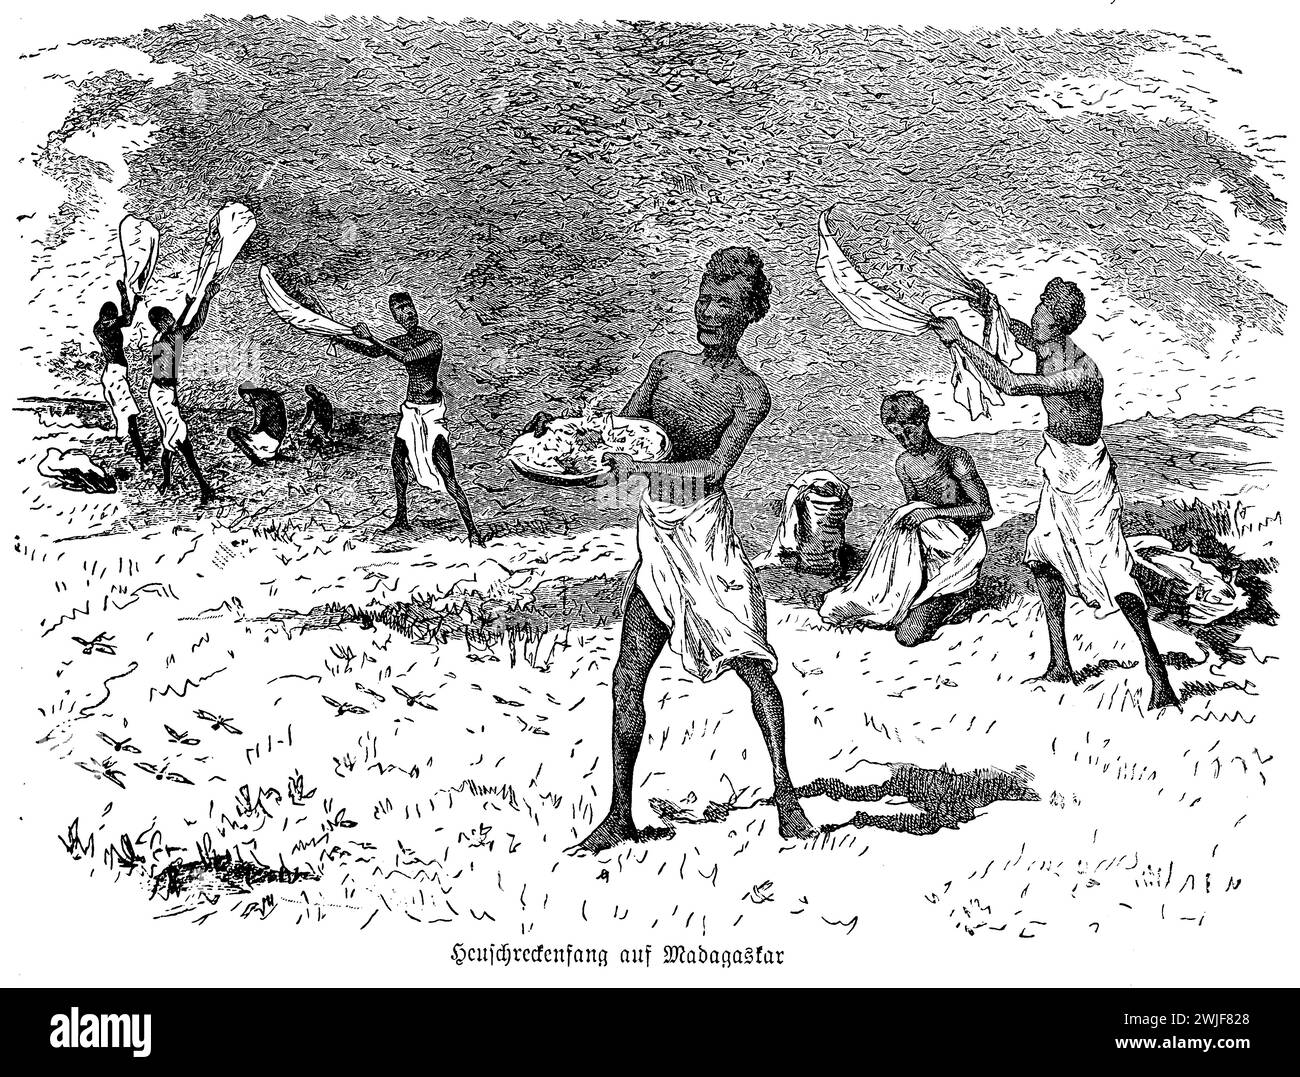 Heuschrecken fangen in Madagaskar, Illustration aus dem 19. Jahrhundert Stockfoto